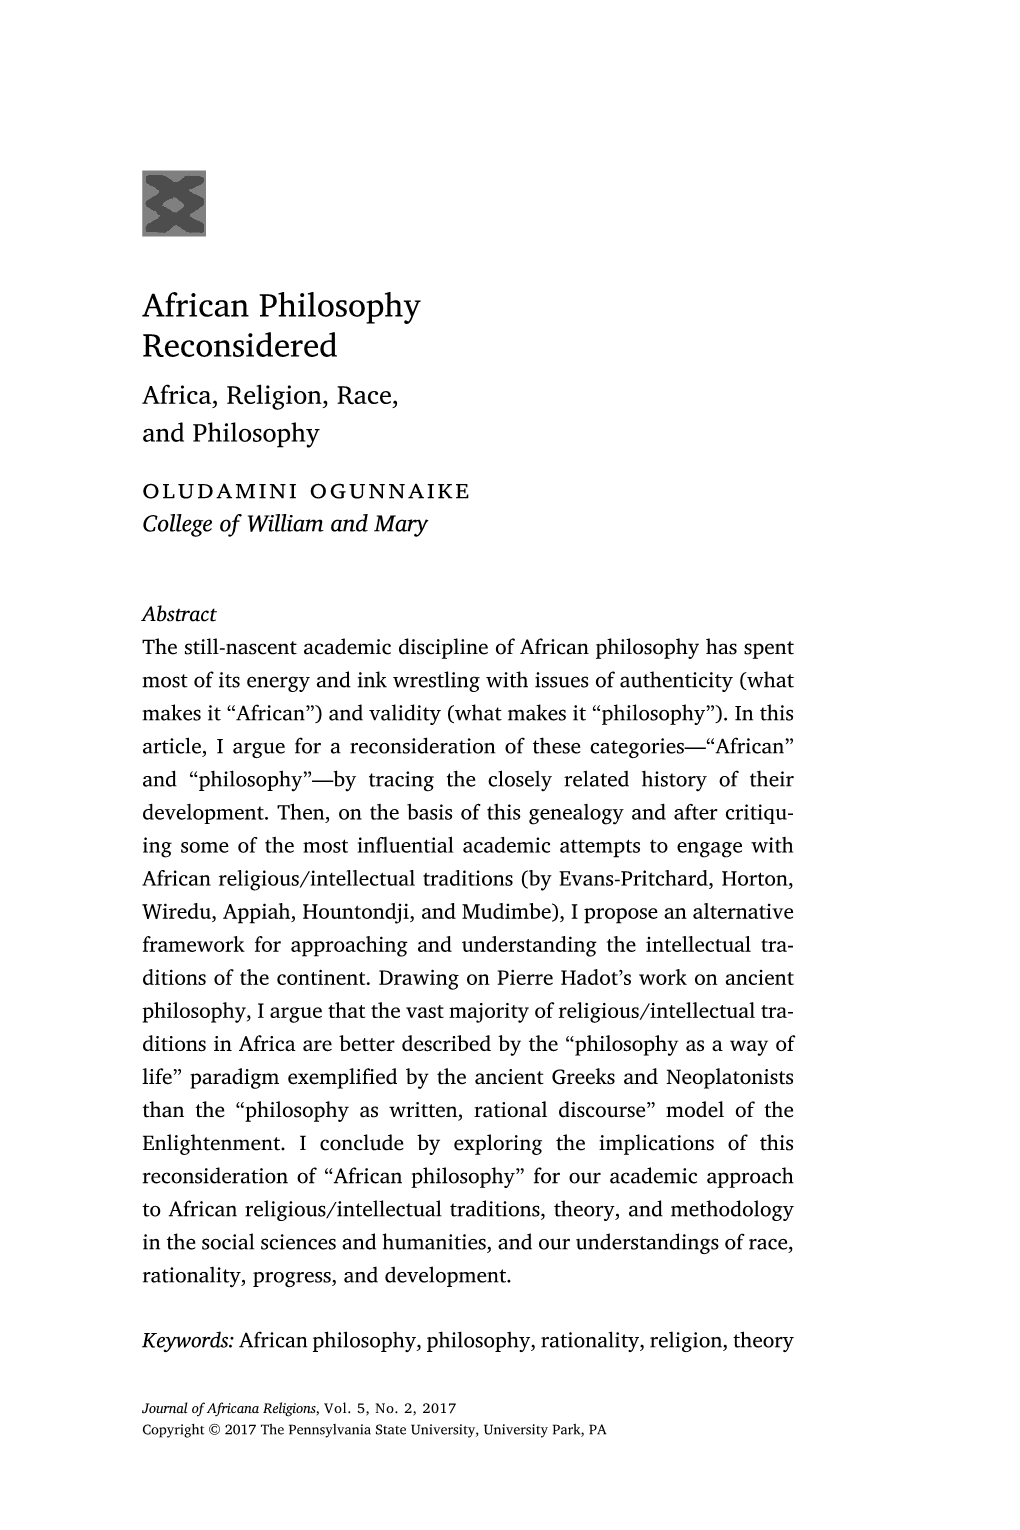 African Philosophy Reconsidered (Ogunnaike)